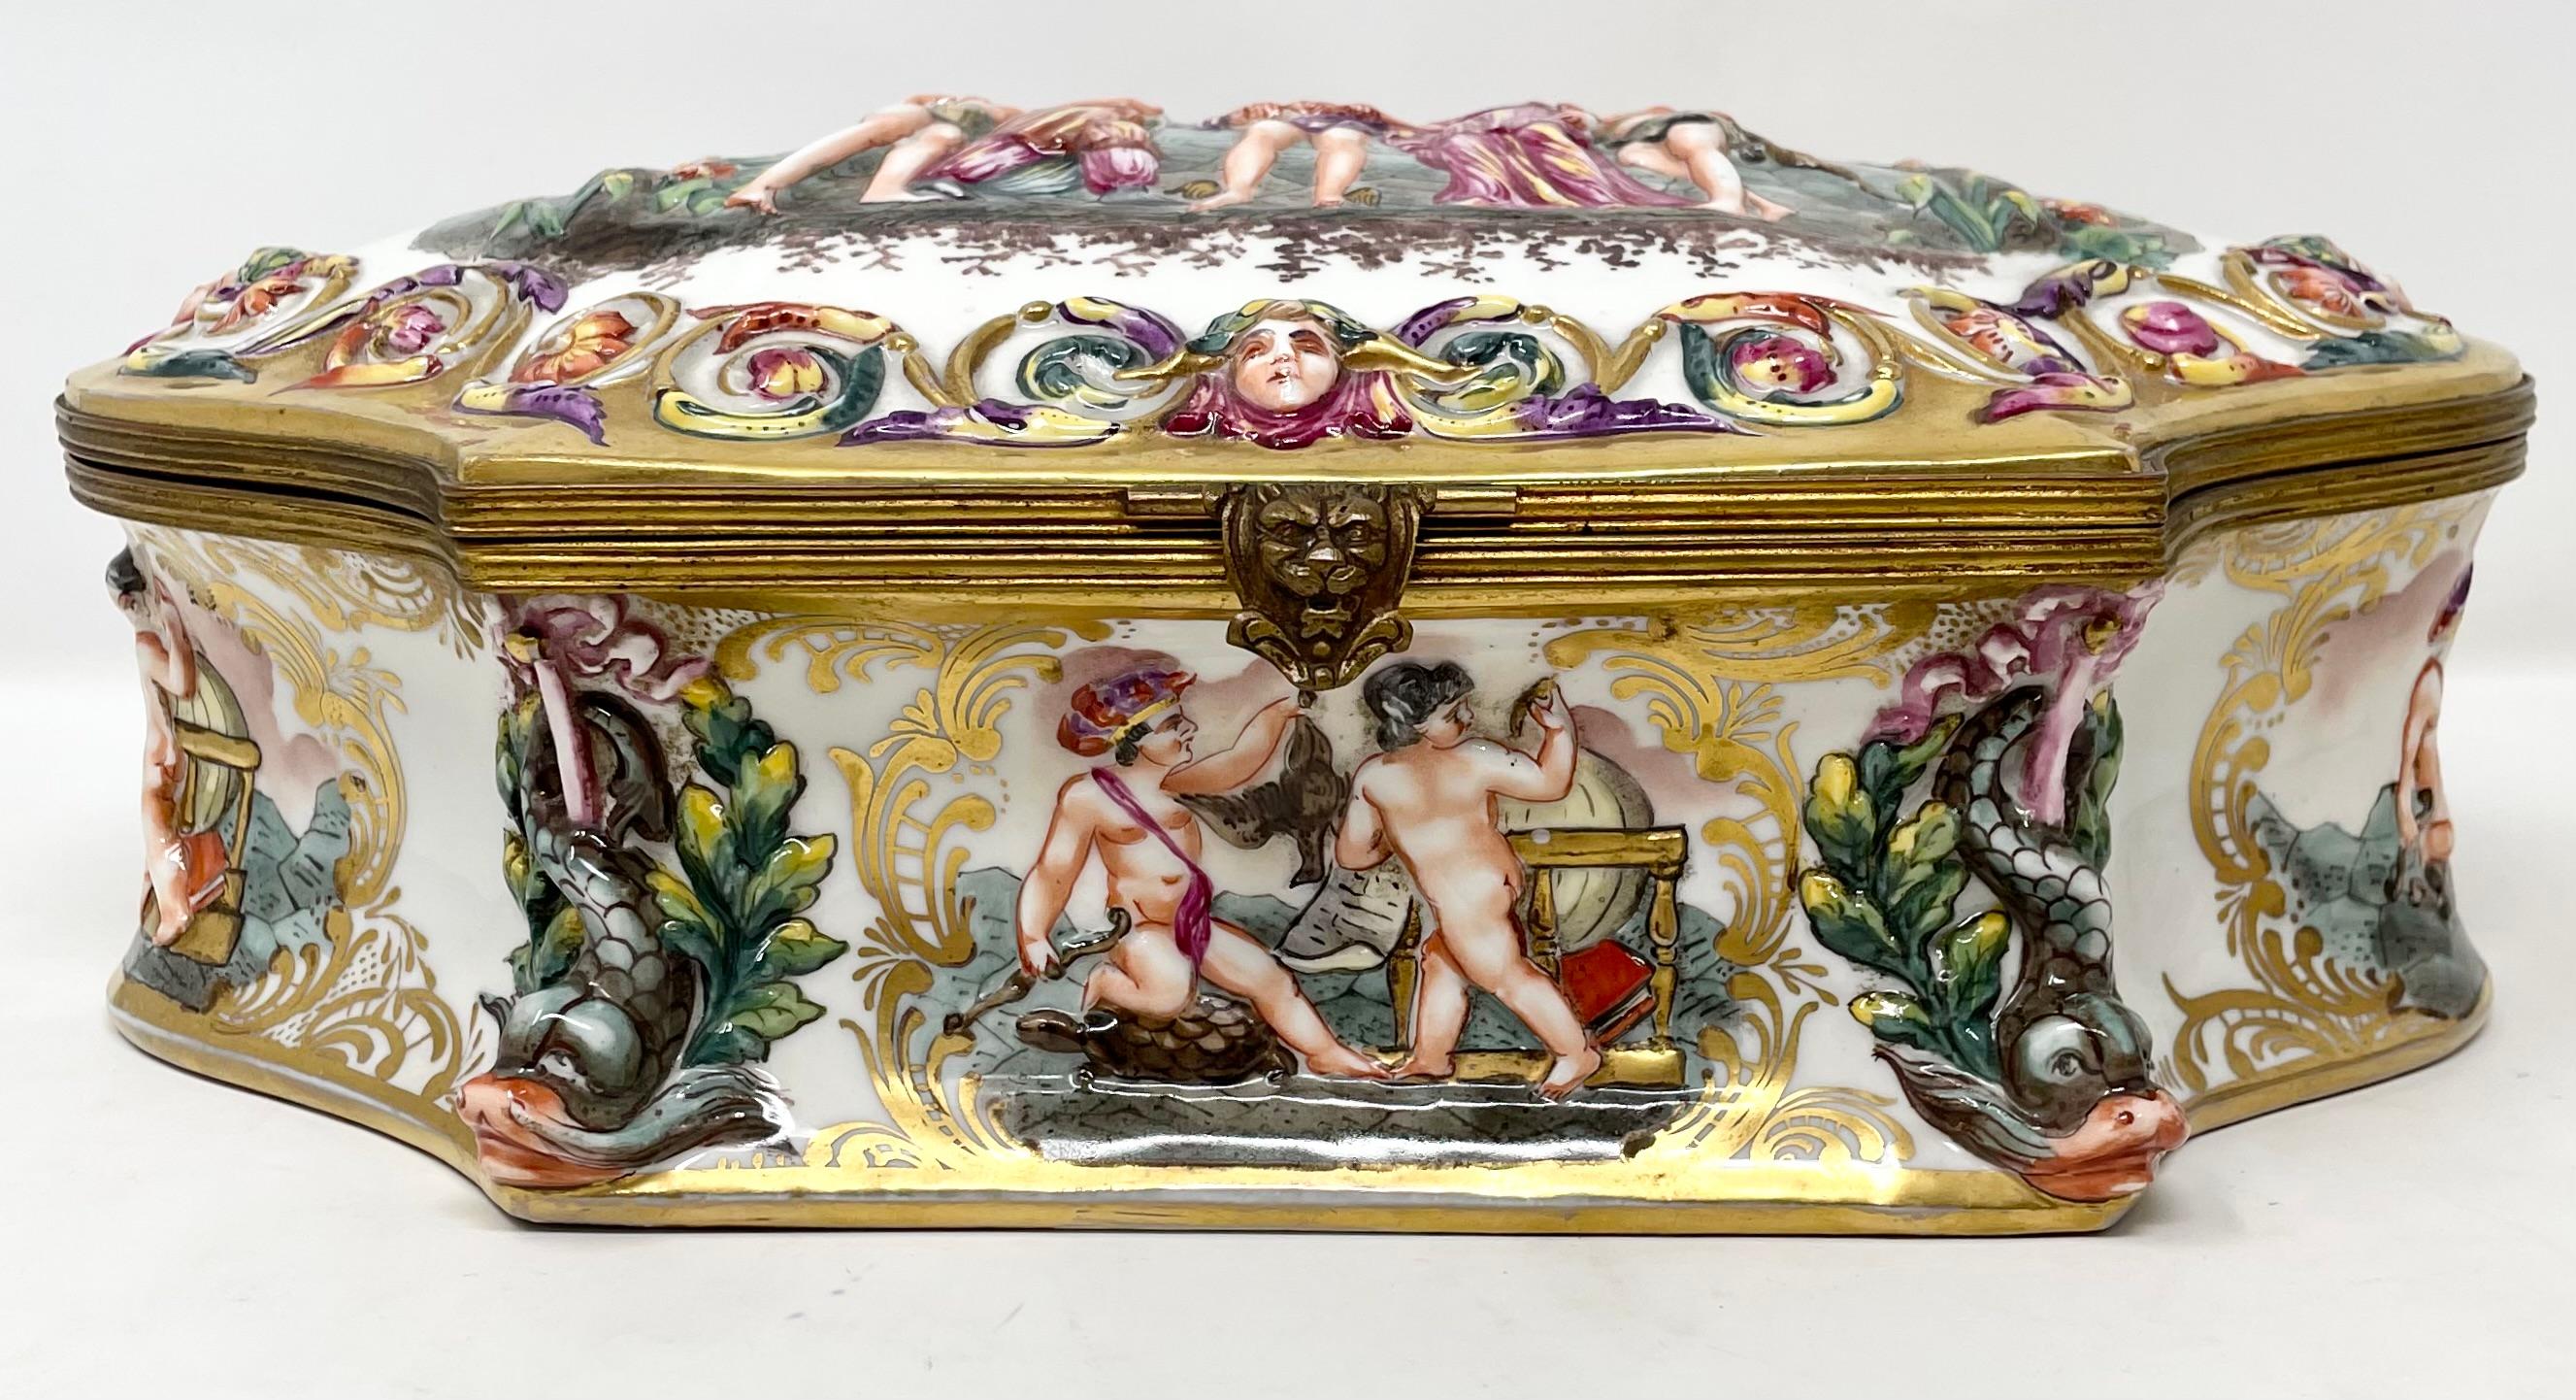 Large Antique Italian Capo di Monte hand-painted porcelain shaped jewel box, circa 1900's.